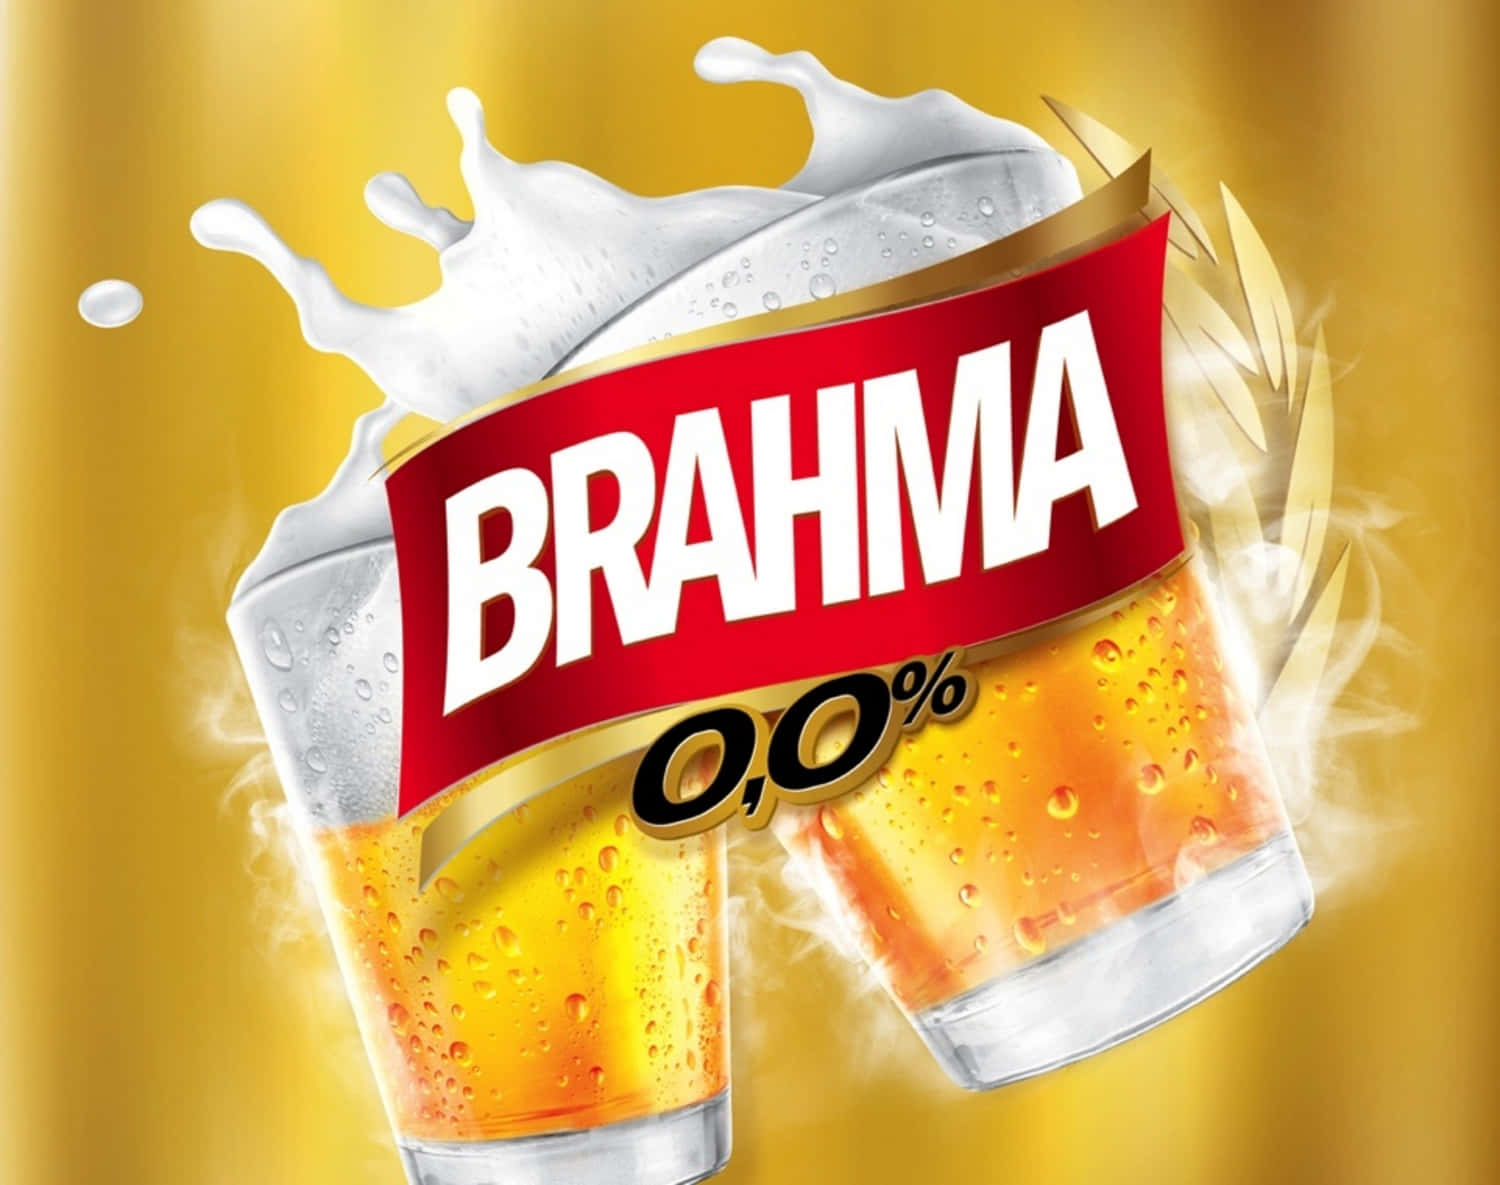 Designetichetta Brahma Zero Percent Brasiliana Sfondo